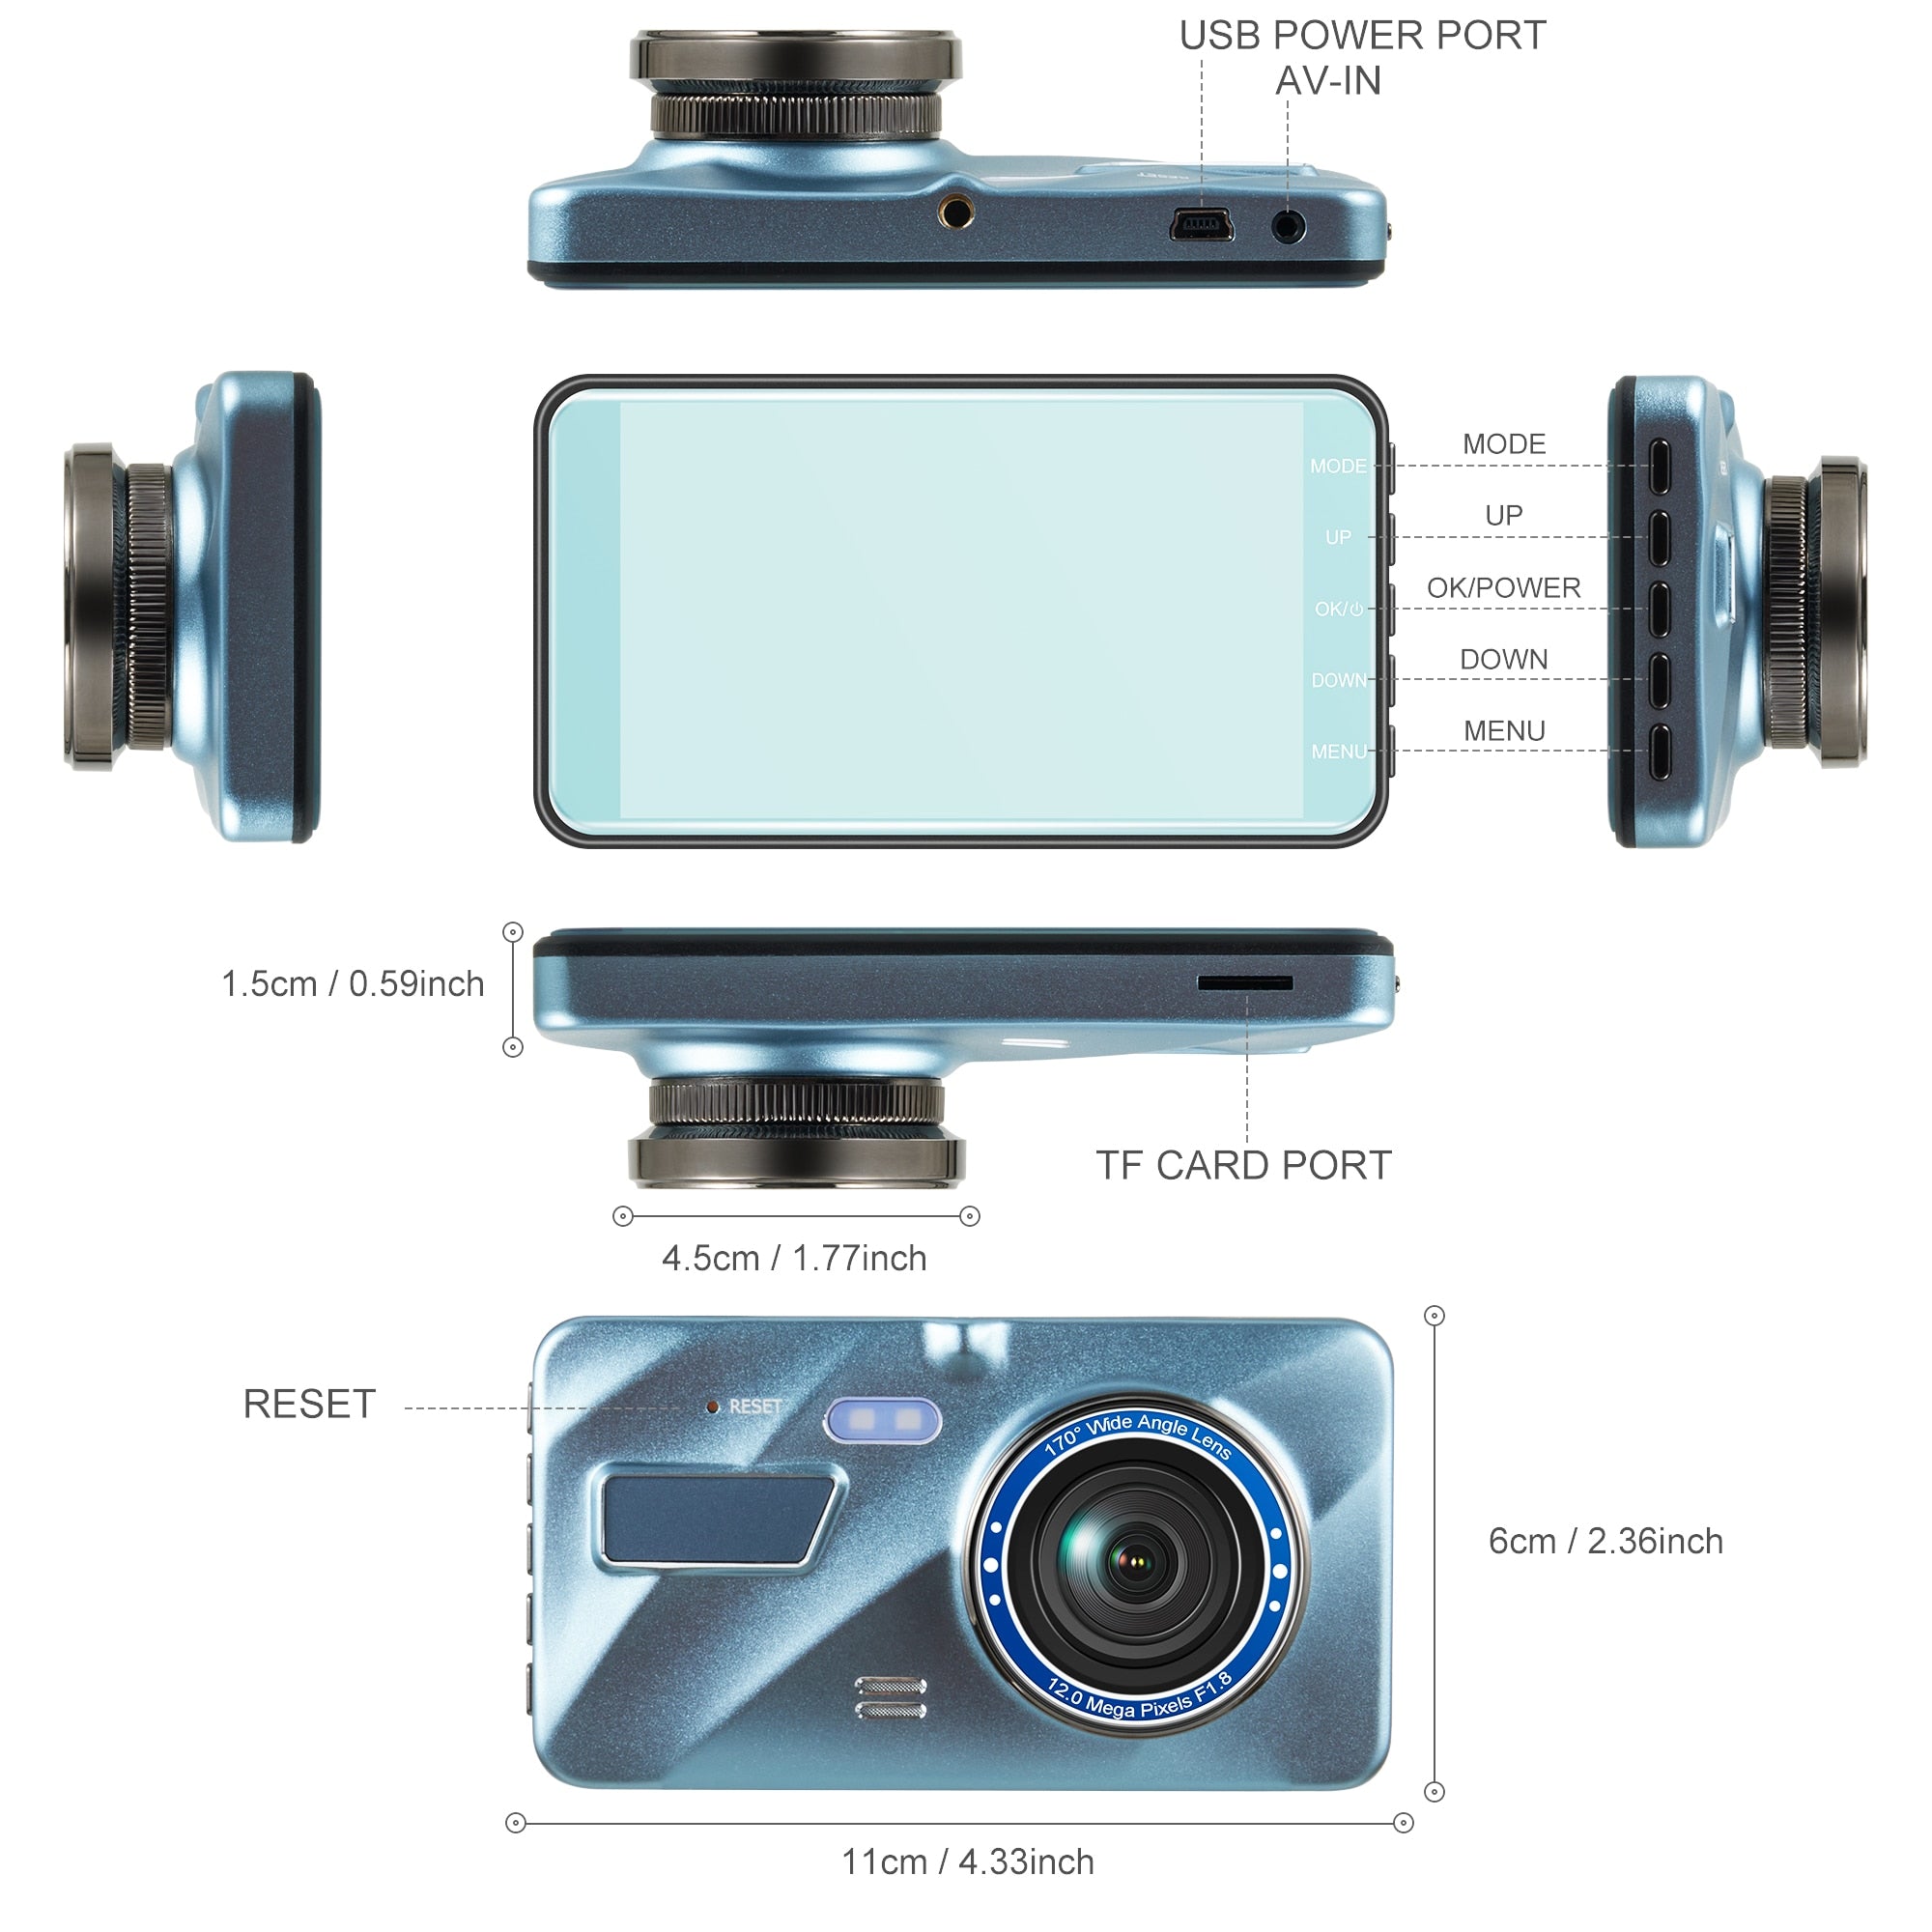 24H Dash Cam Black Box in Car DVR Camera Video Recorder Rear View Dual Lens HD Cycle Recording Video Mirror Recorder Black Box